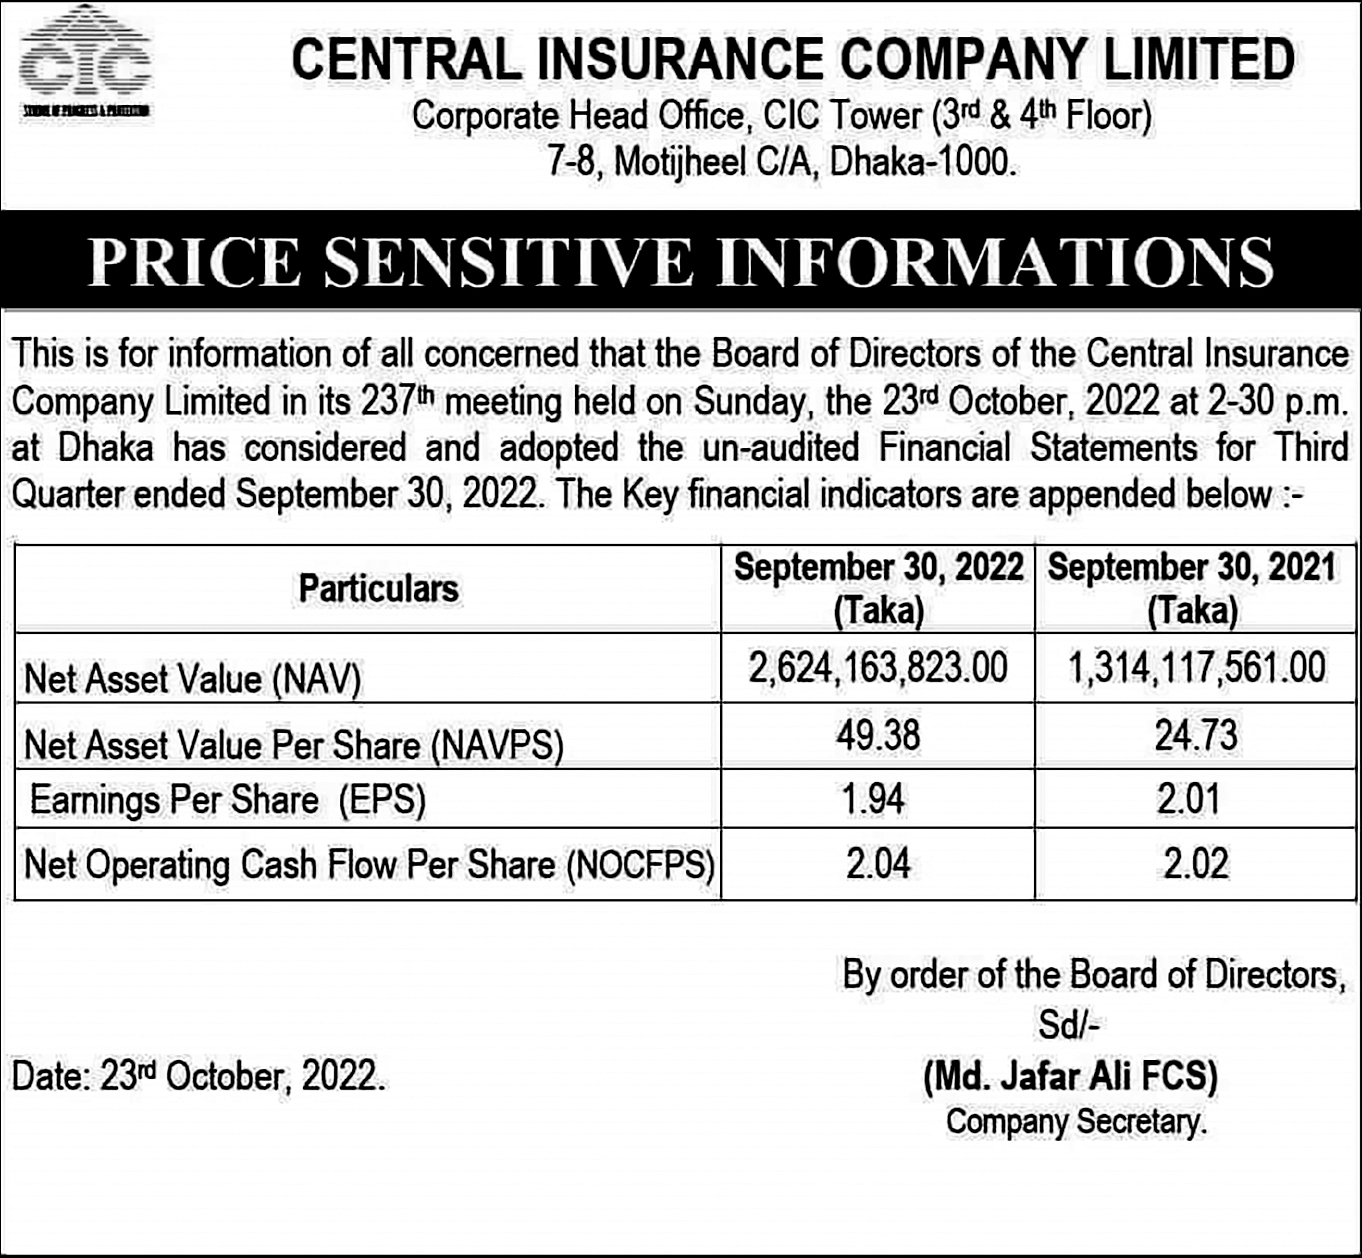 Price Sensitive Information of Central Insurance Company Ltd